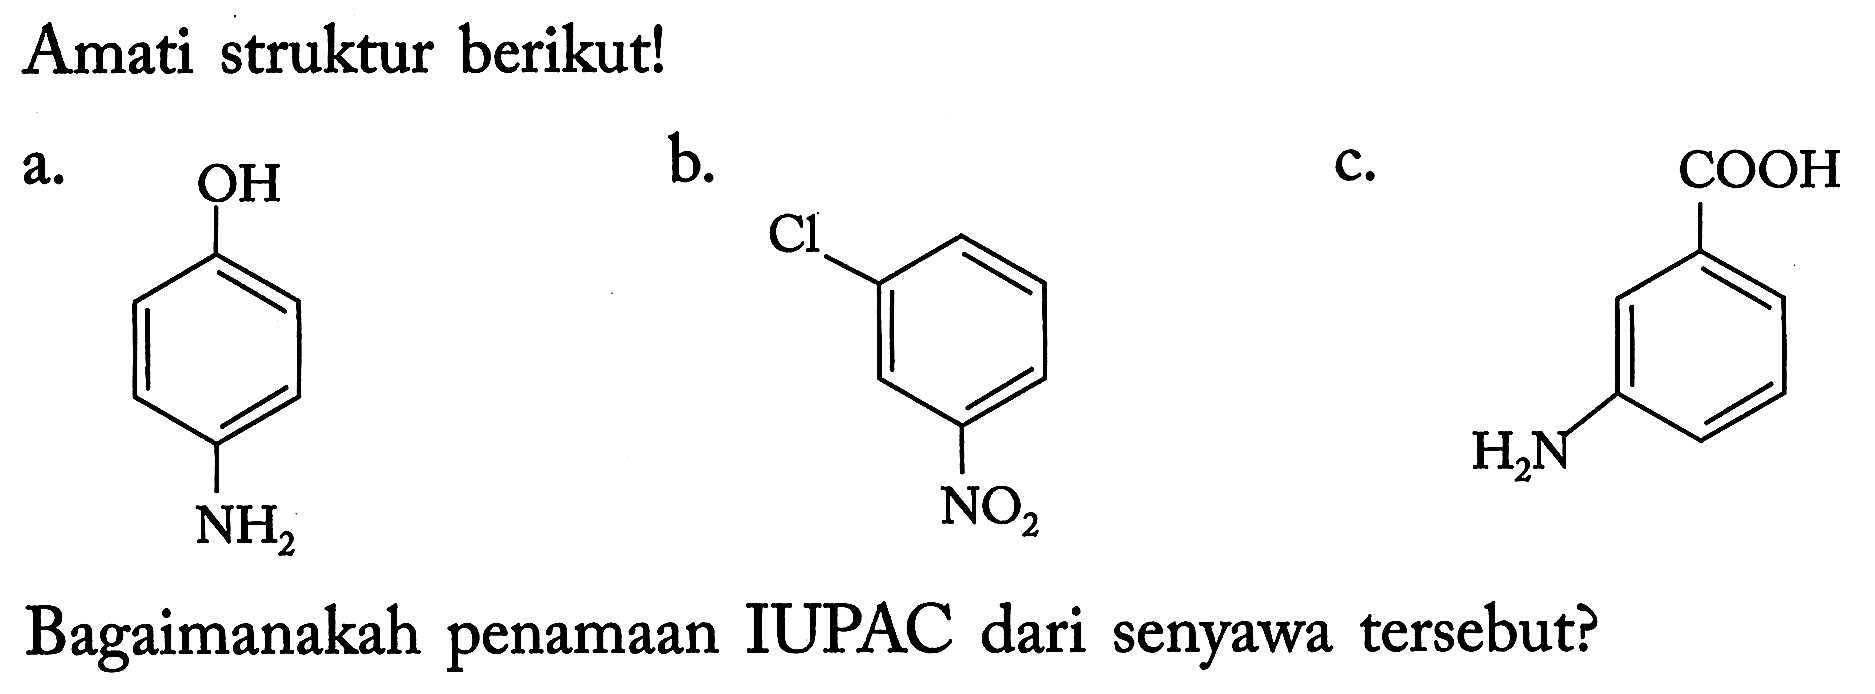 Amati struktur berikut!
a. OH - Benzena - NH2
b. Cl - Benzena - NO2 
c. COOH - Benzena - H2N 
Bagaimanakah penamaan IUPAC dari senyawa tersebut?